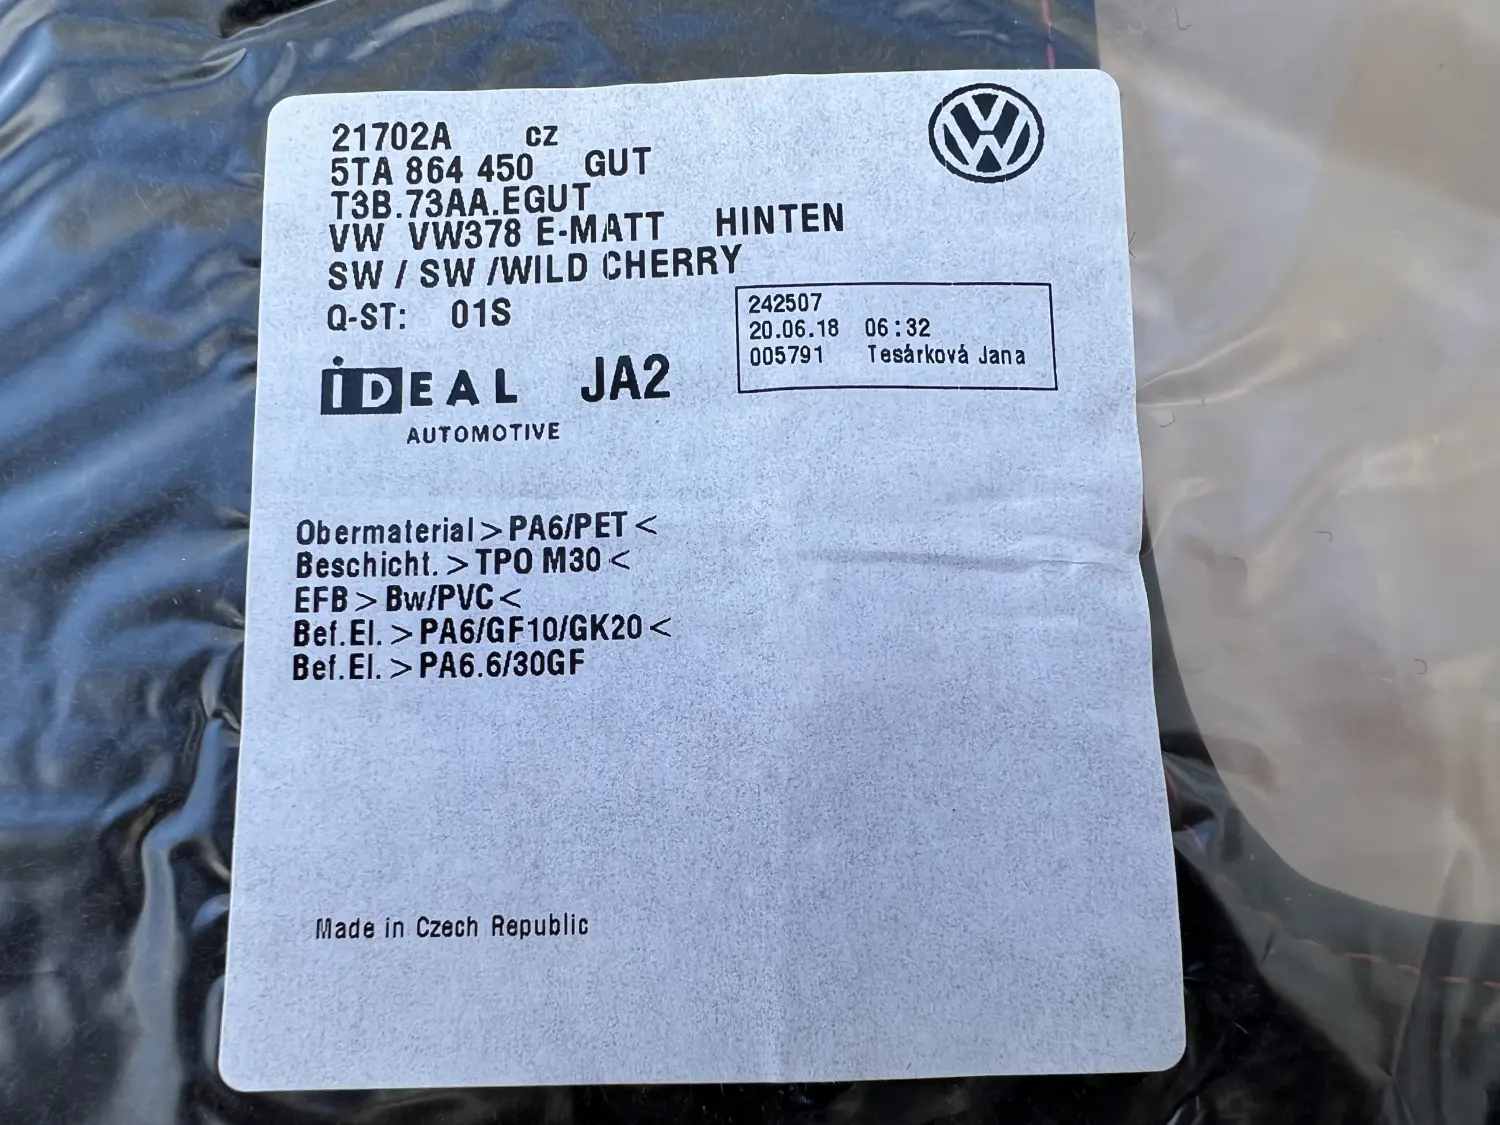 Fußmatten VW Touran 2 5T Original Neu!